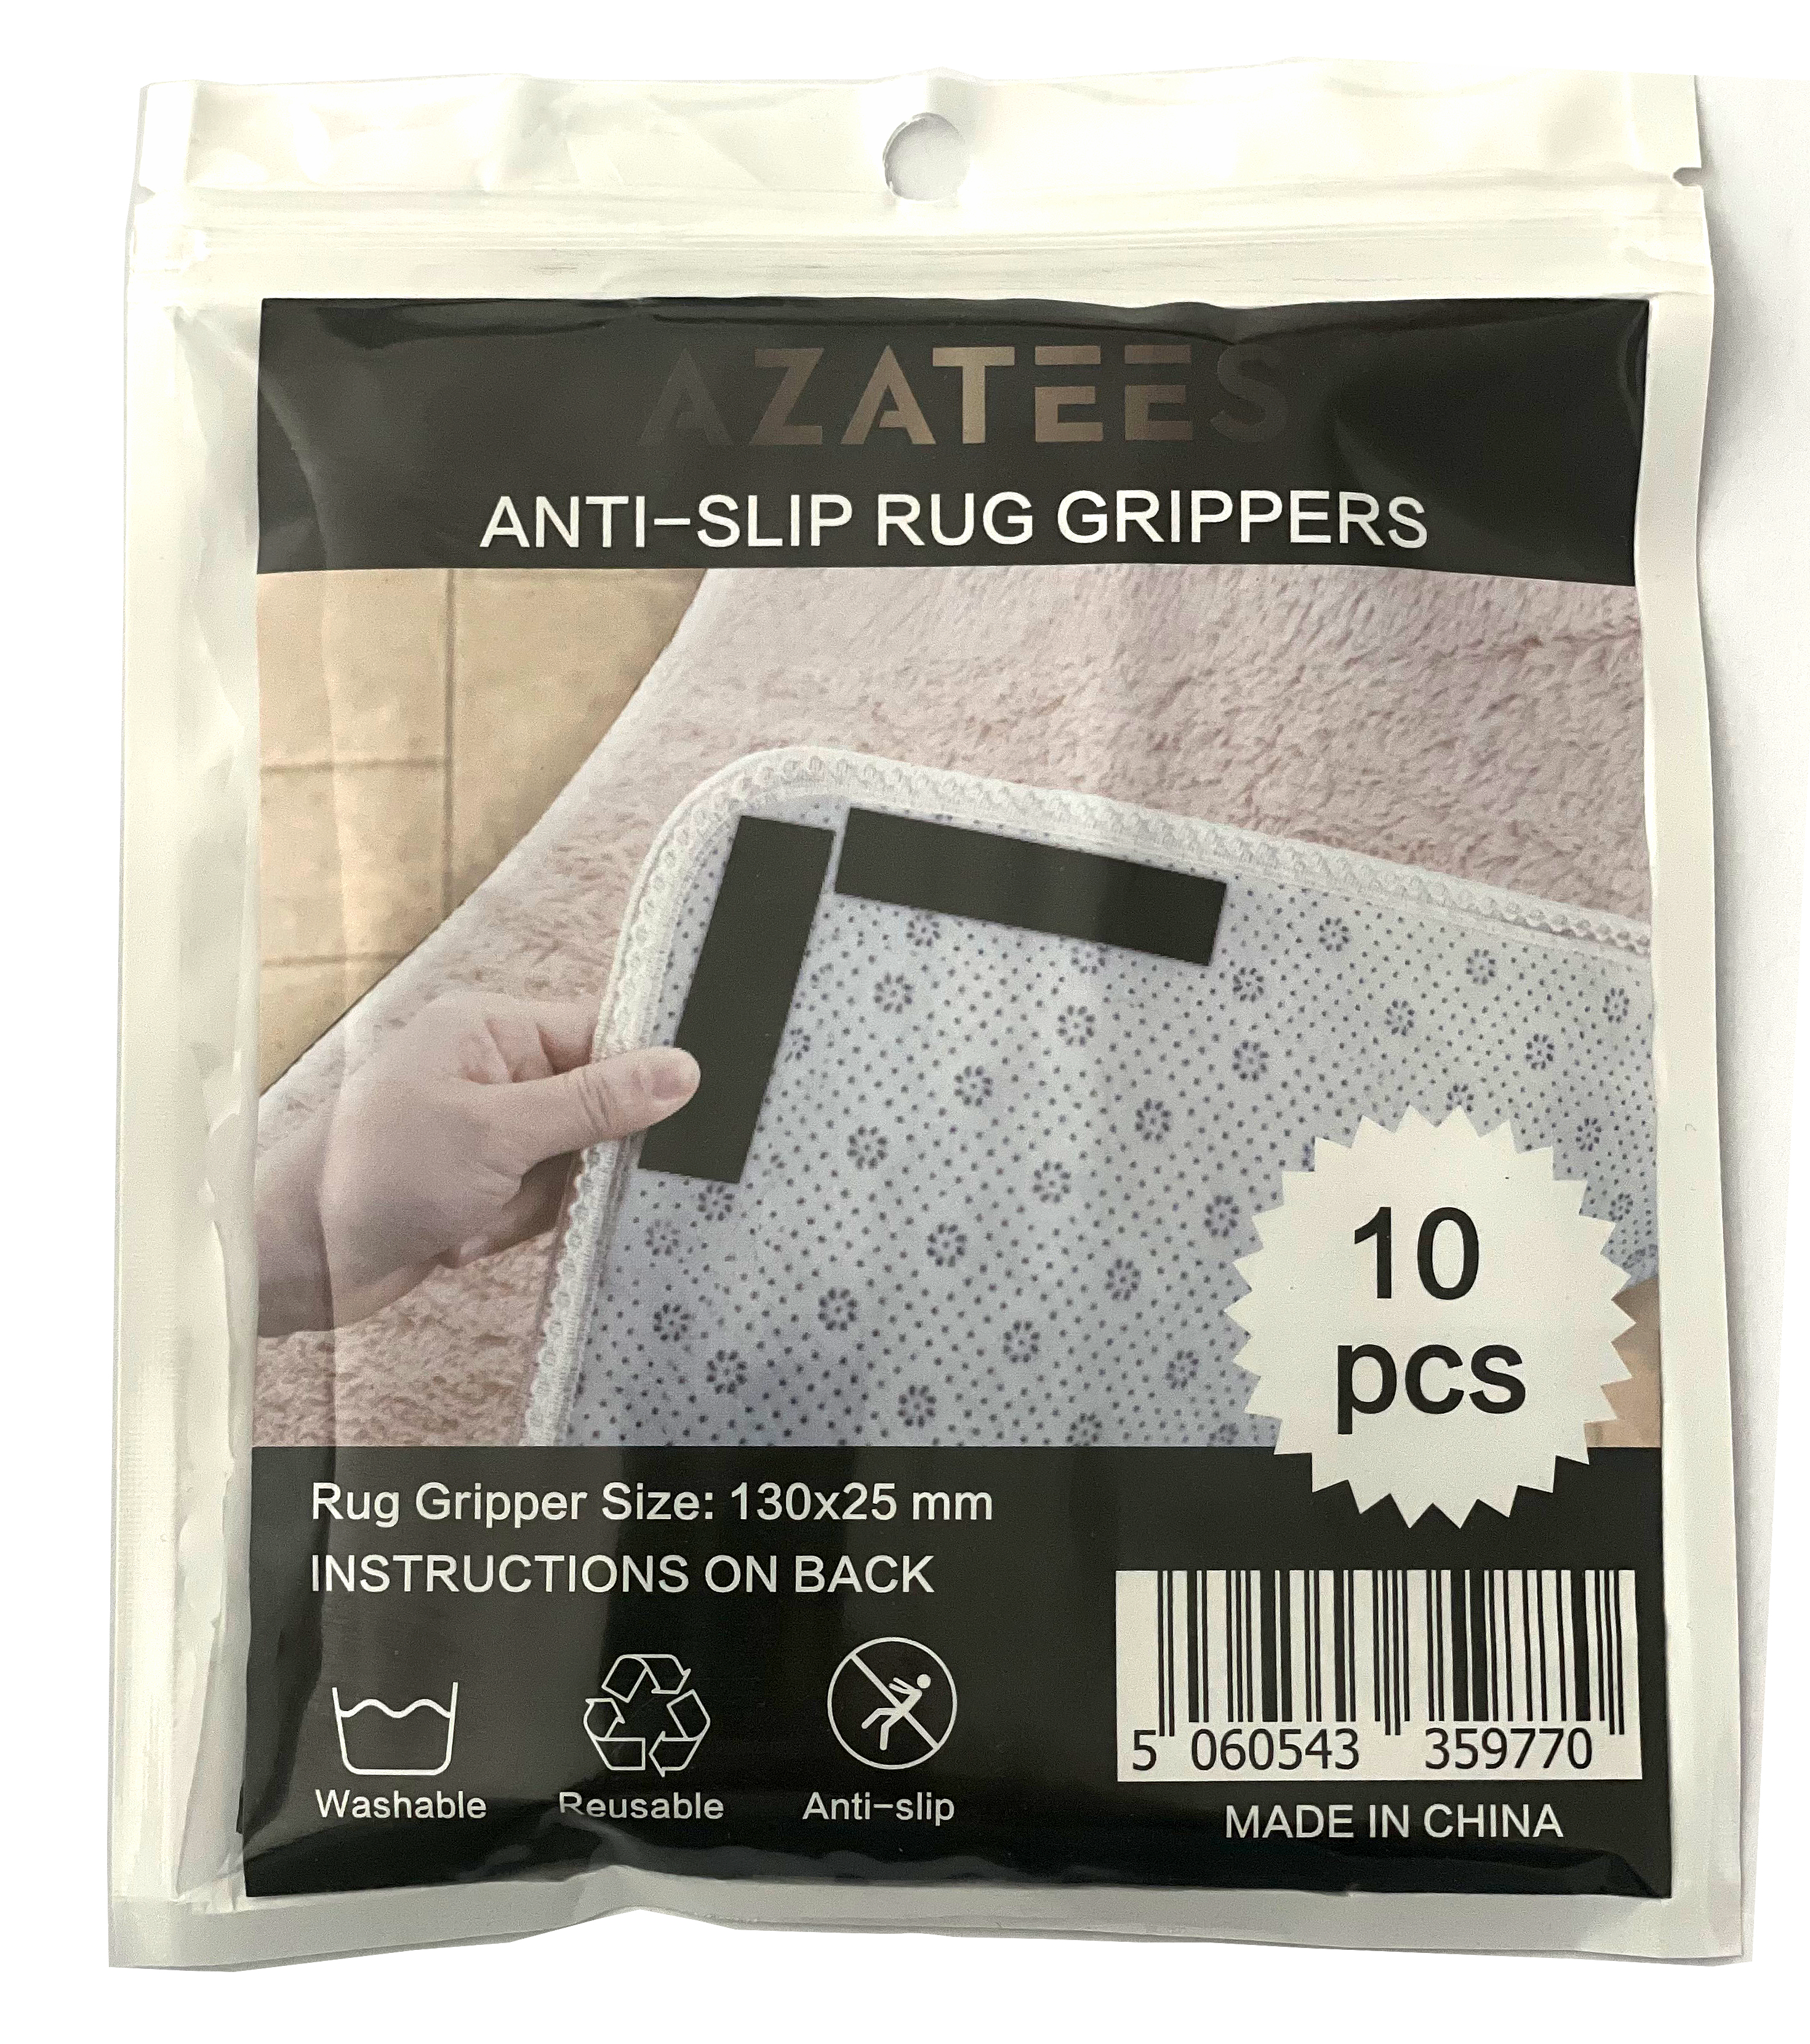 10 Pcs Anti-slip and Reusable Rug Gripper 130x25 Mm